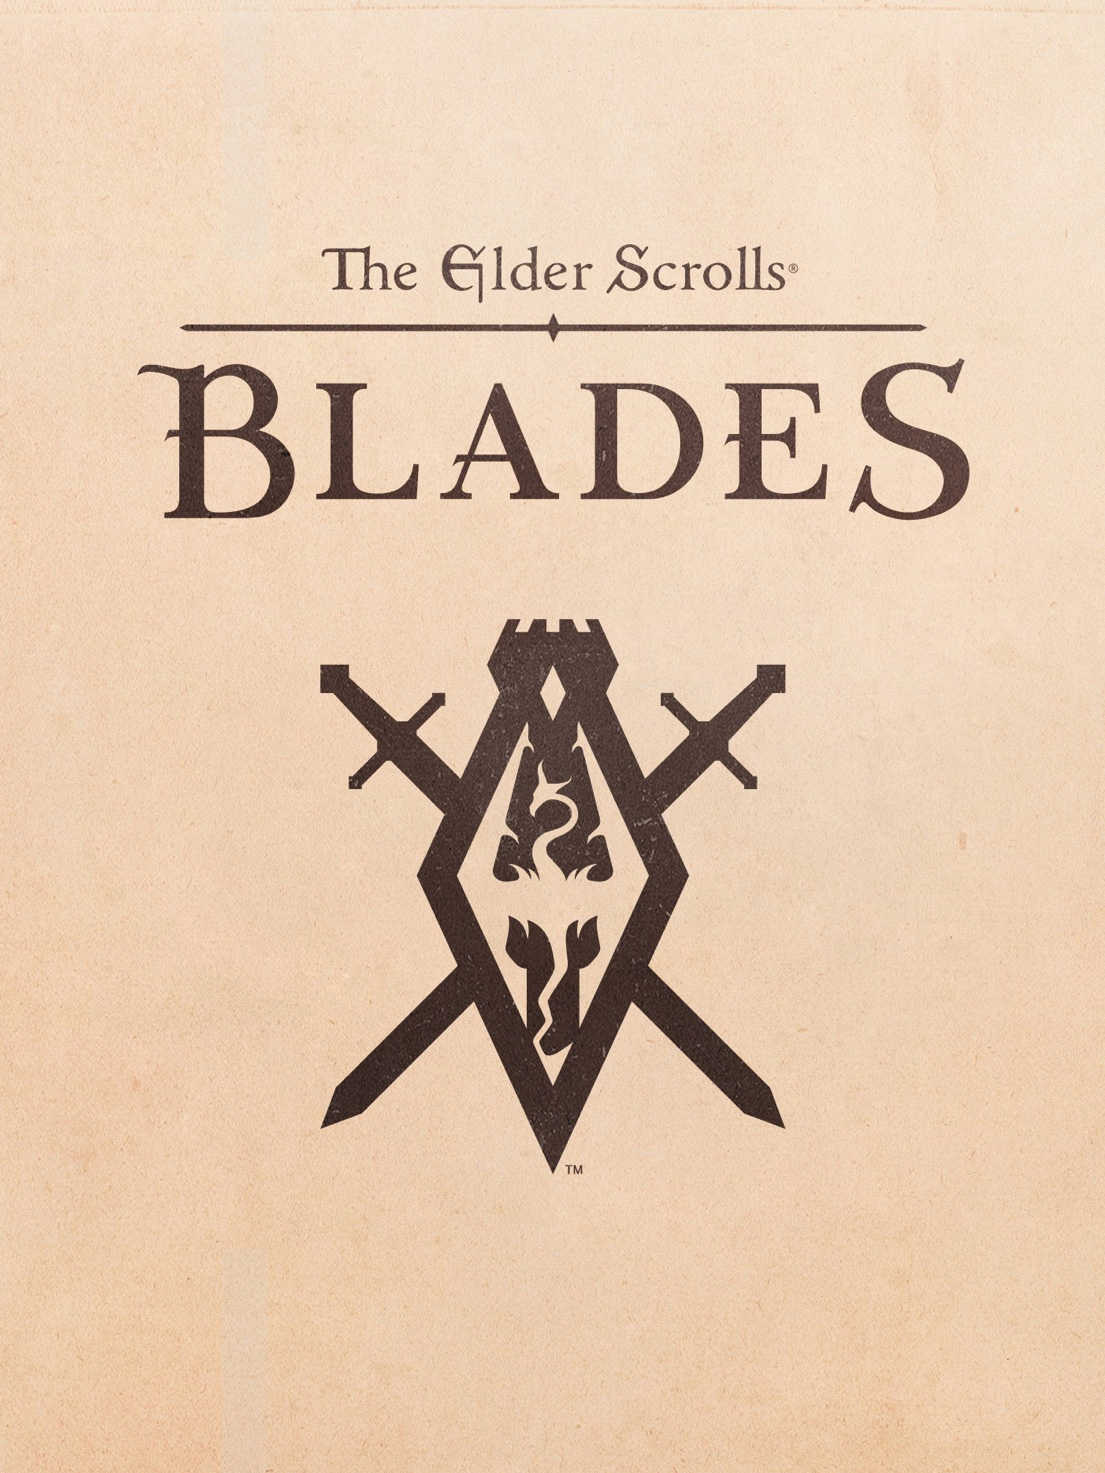 The Elder Scrolls: Blades cover